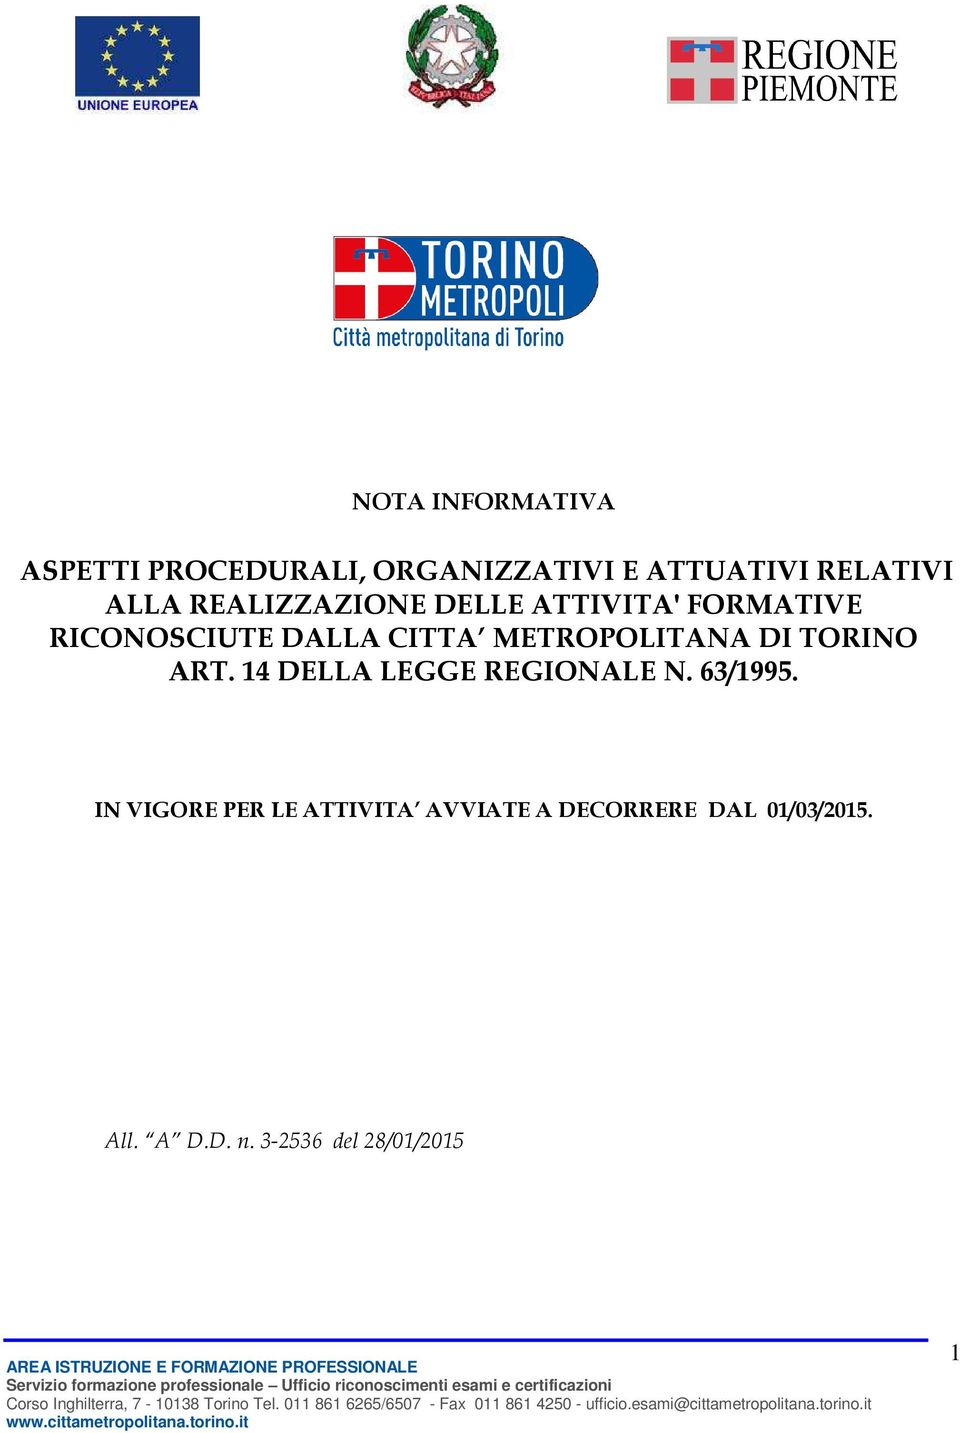 METROPOLITANA DI TORINO ART. 14 DELLA LEGGE REGIONALE N. 63/1995.